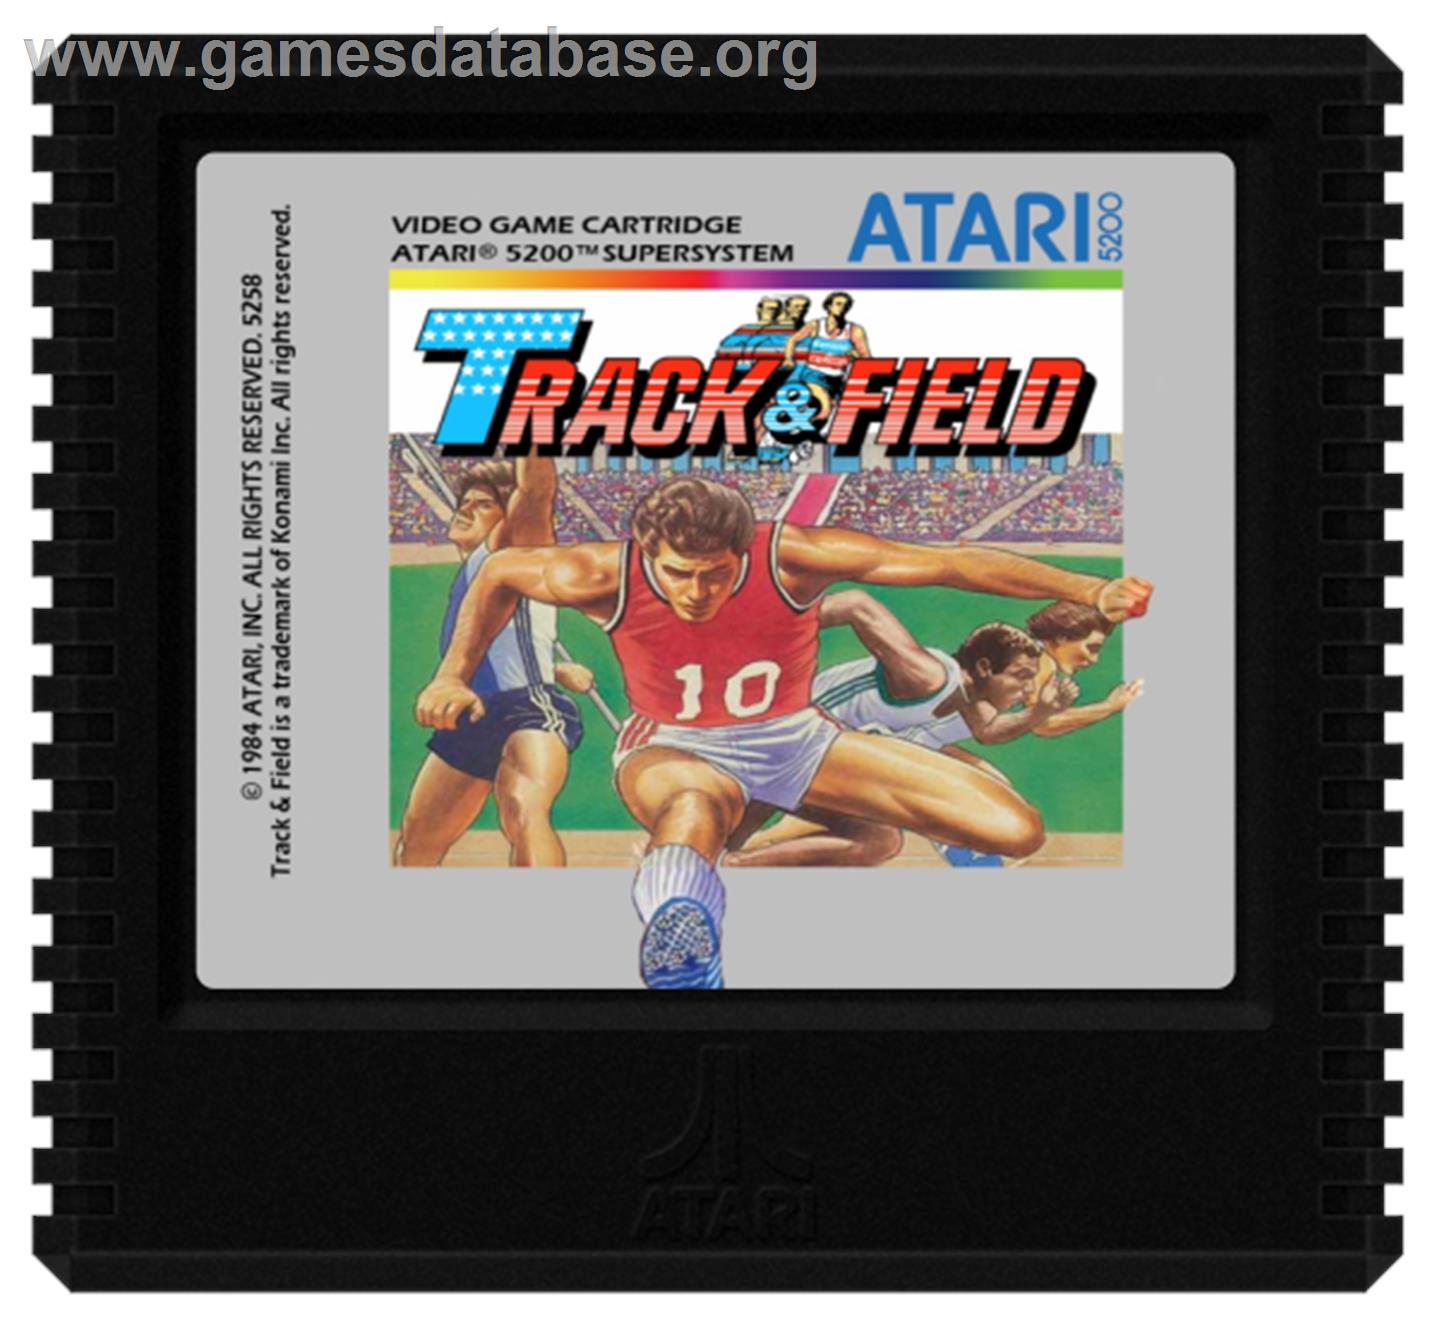 Track & Field - Atari 5200 - Artwork - Cartridge